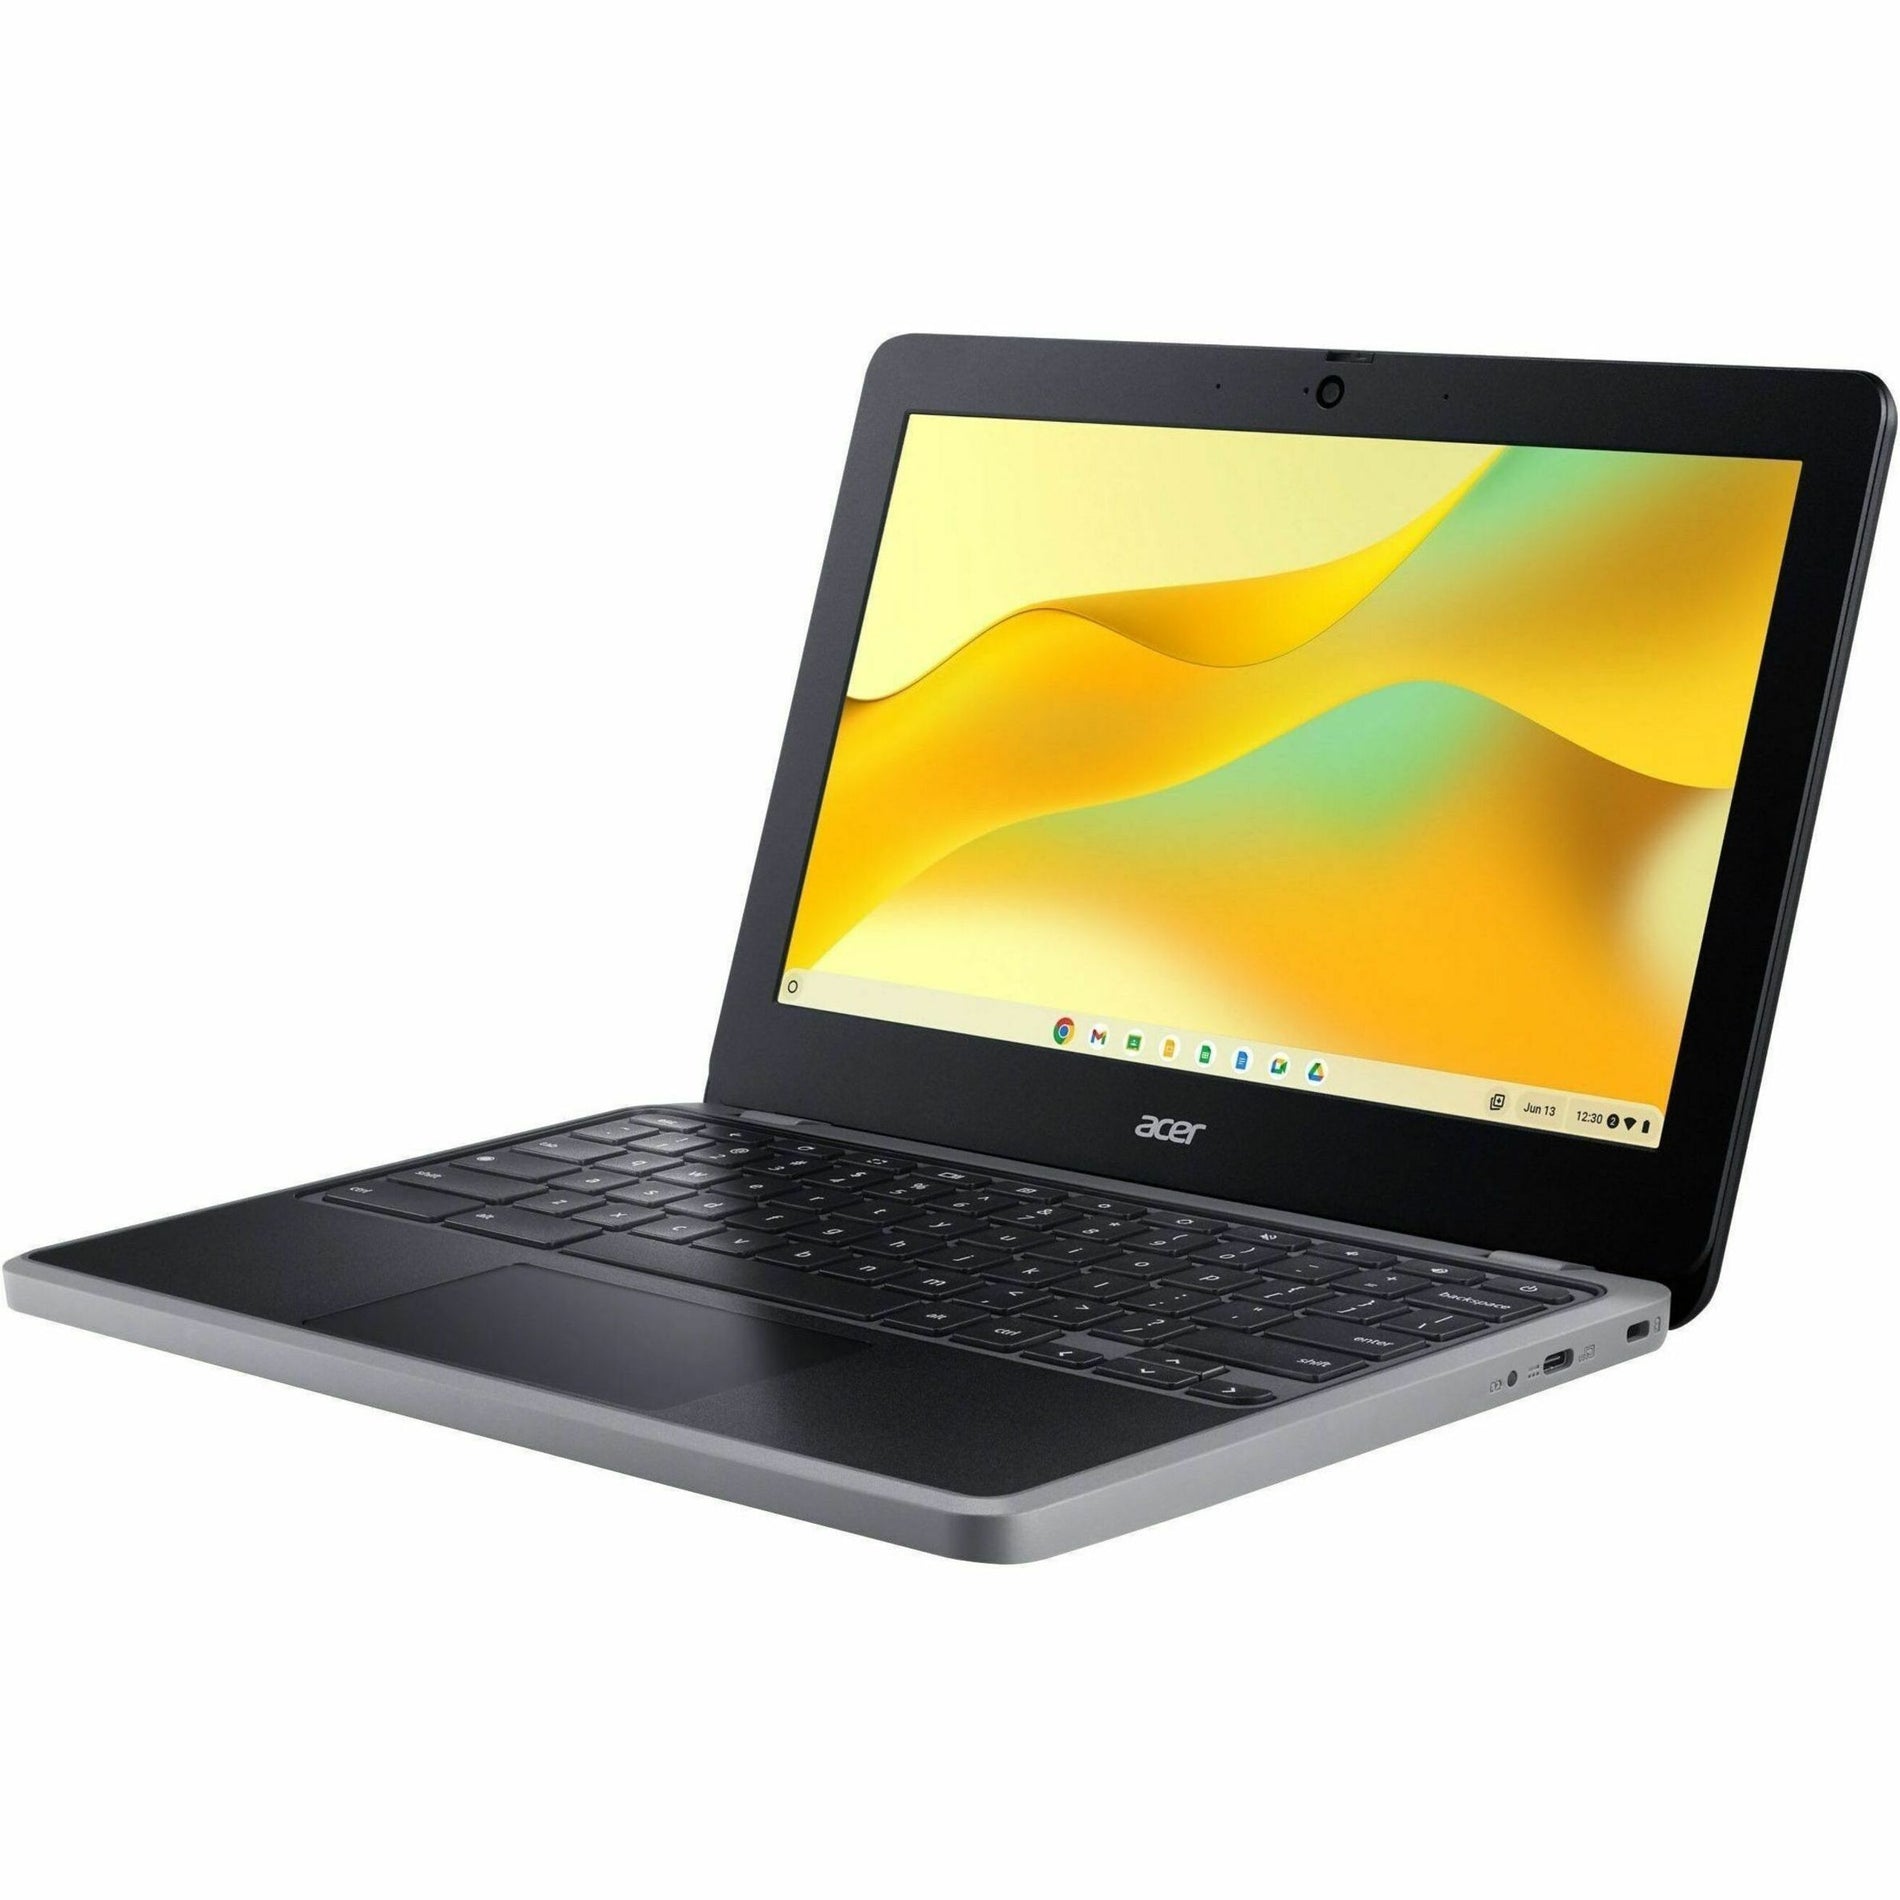 Acer NX.KKBAA.001 Chromebook 311 C723-K22H 11.6" Chromebook, Octa-core, 4GB RAM, 32GB Flash Memory, Shale Black